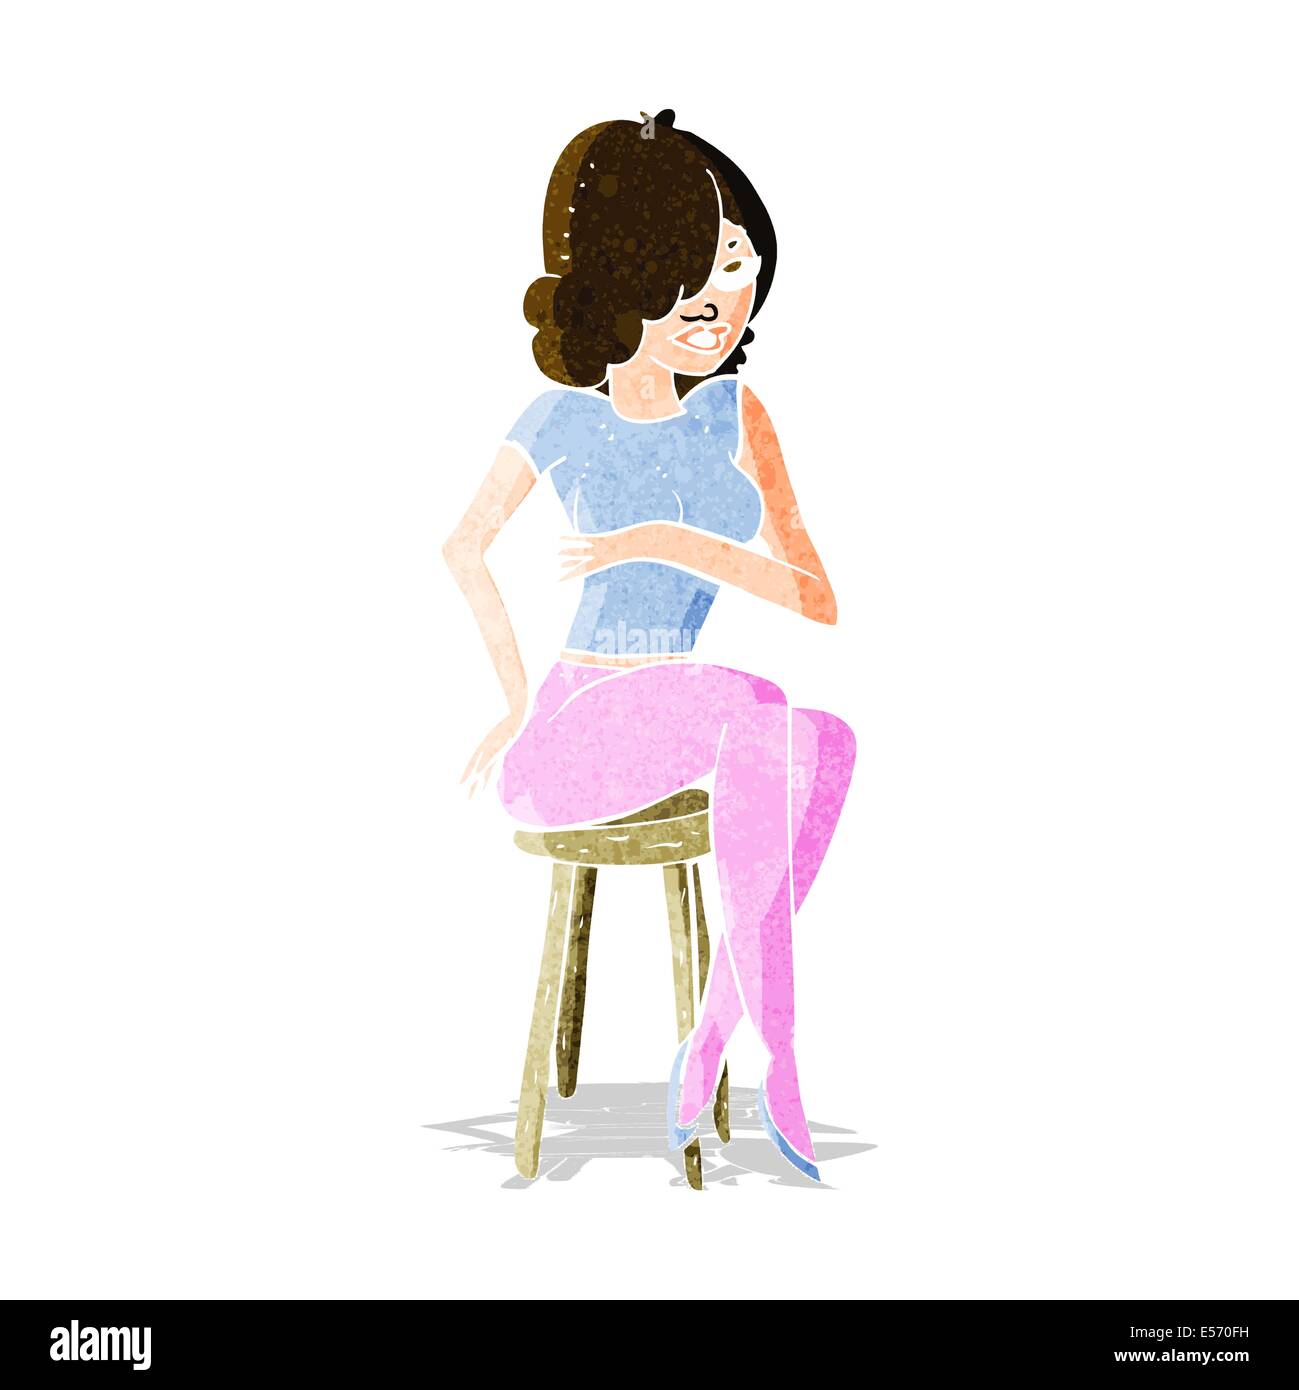 cartoon woman sitting on bar stool Stock Vector